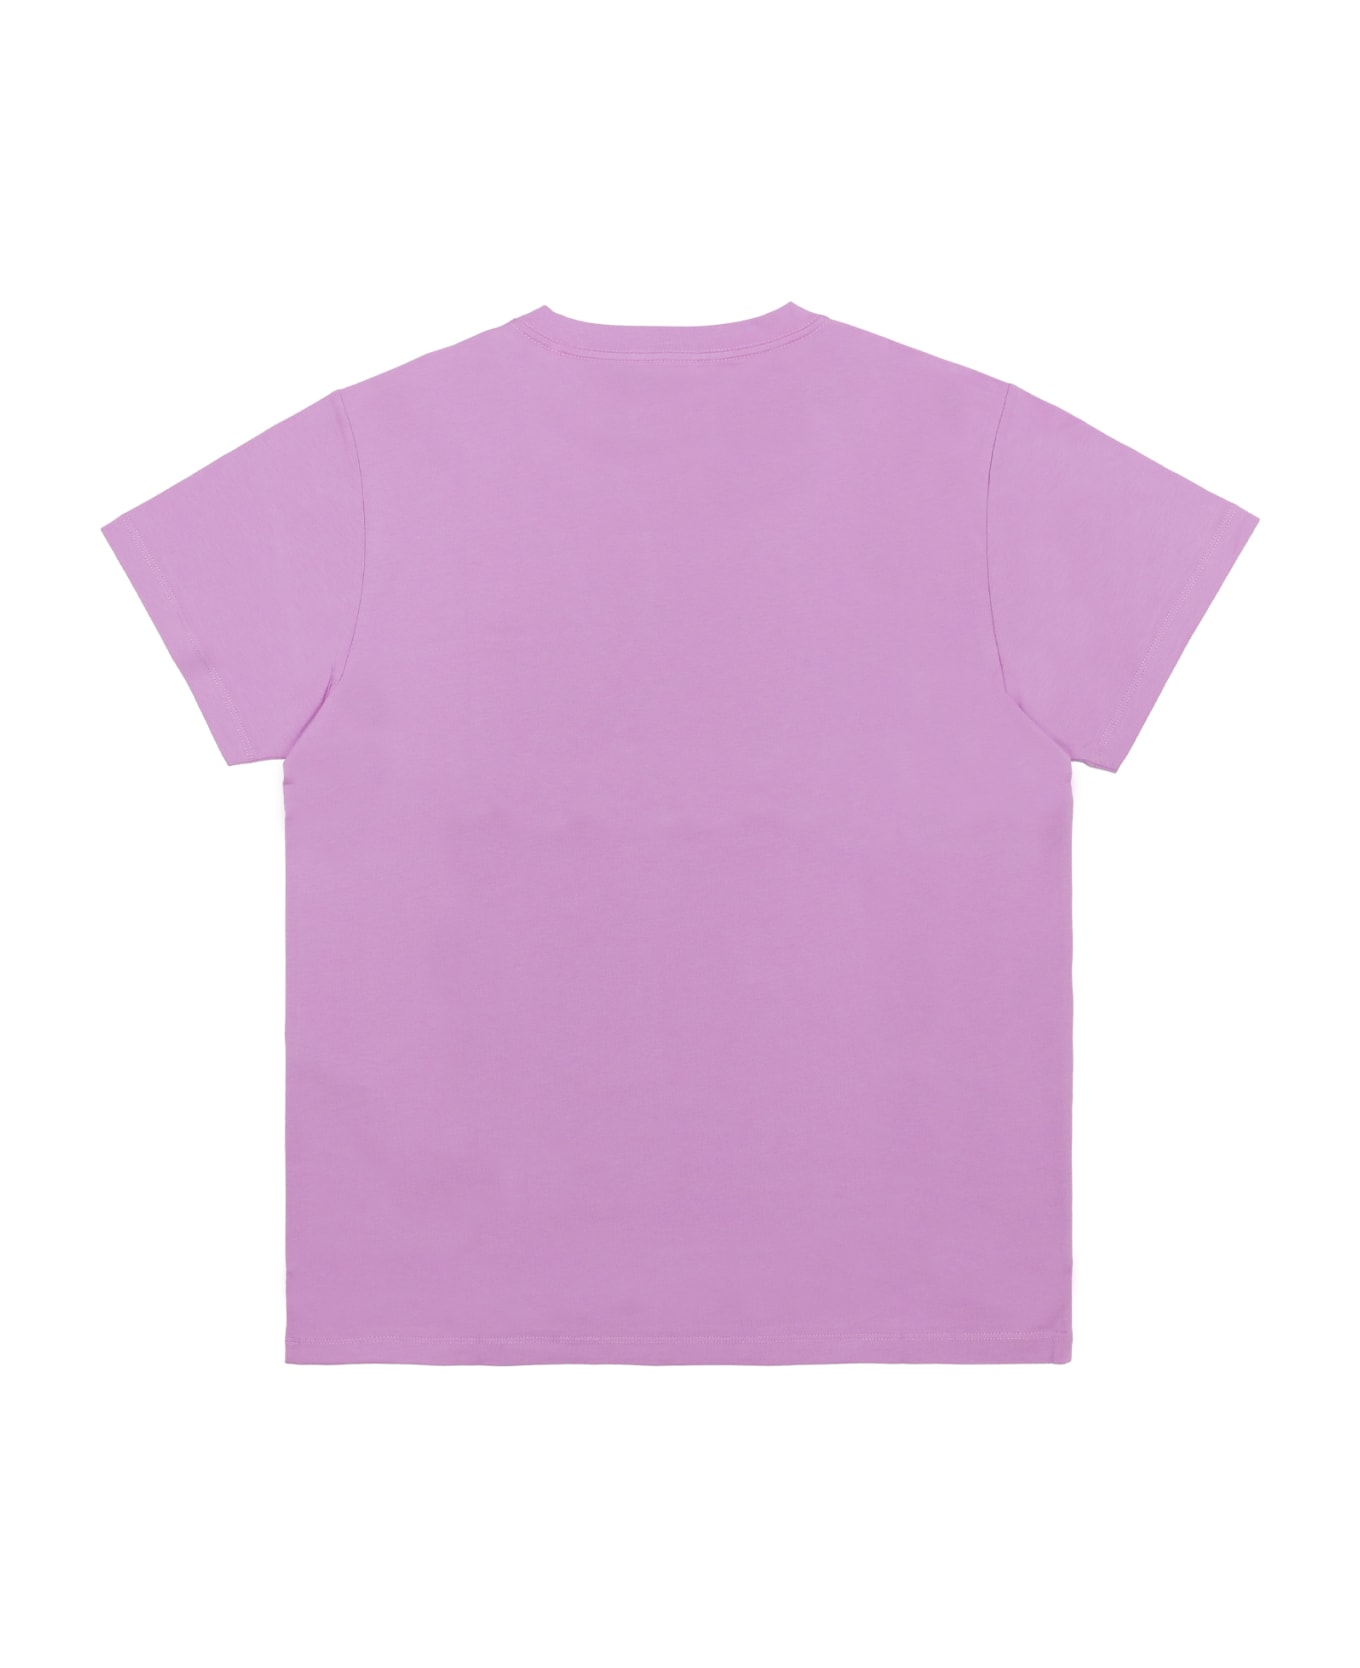 Marant Étoile T-shirt - Pink